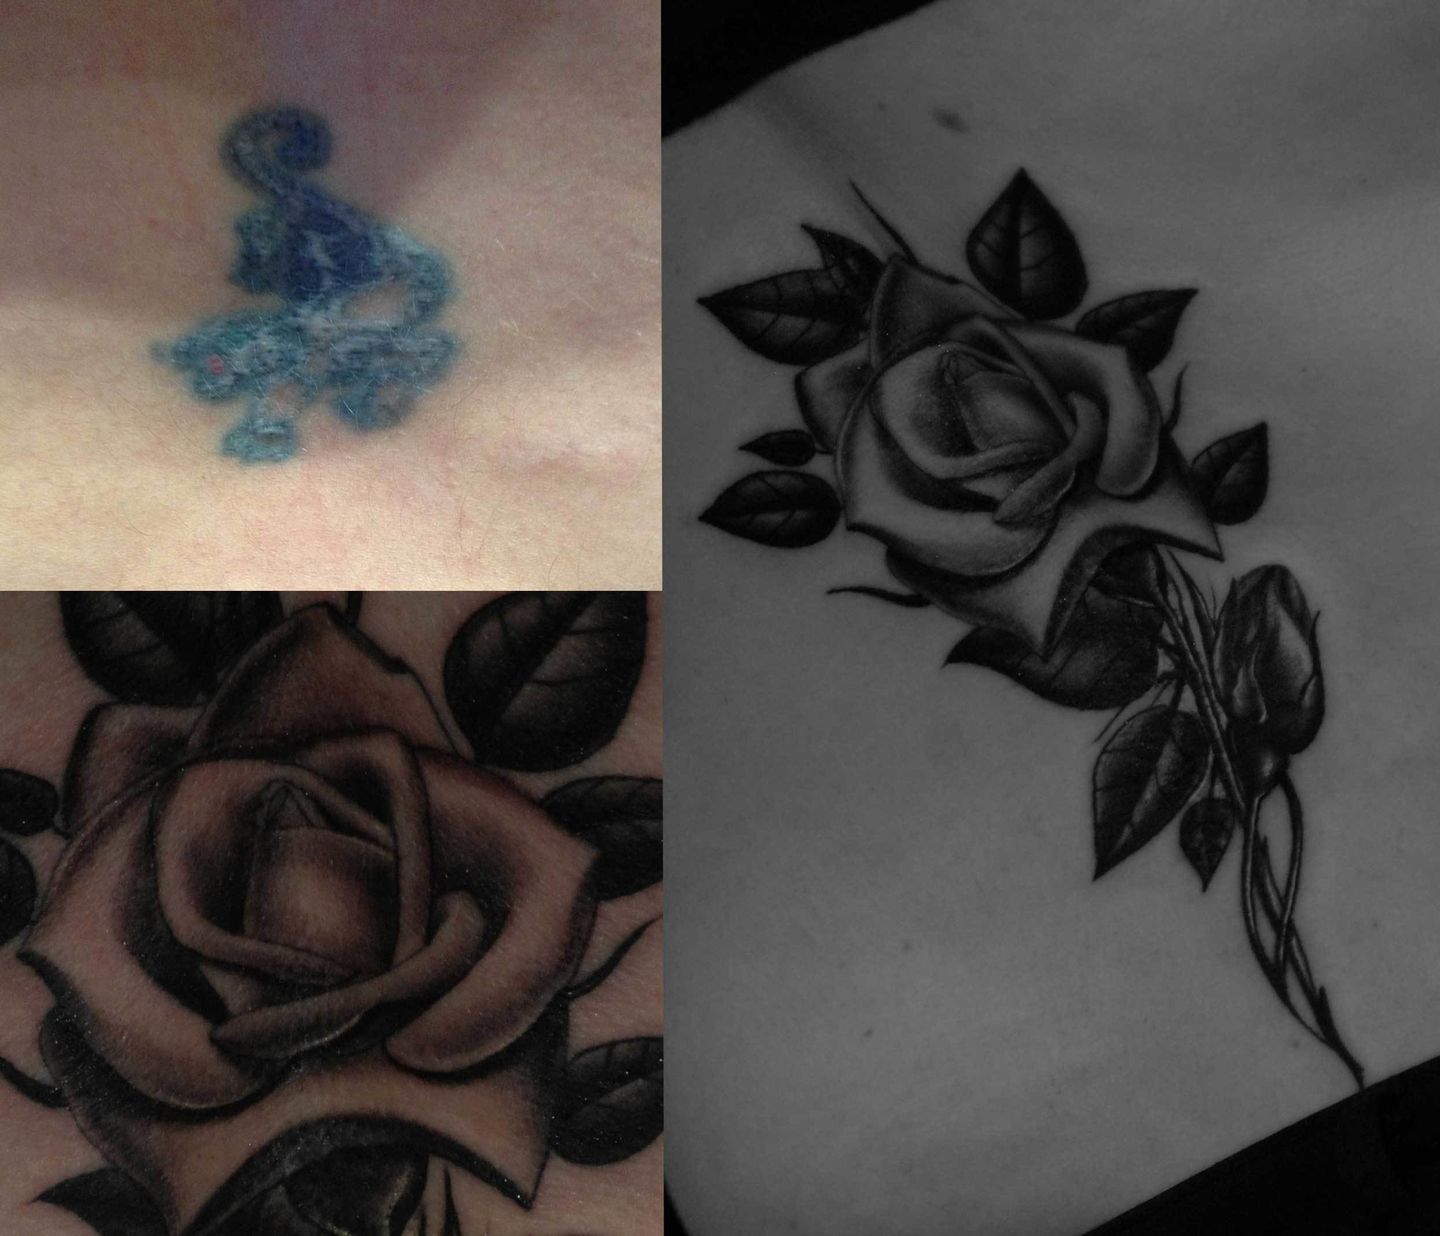 Rose-cover-up-rosemary-mckevitt-tattoo-ireland